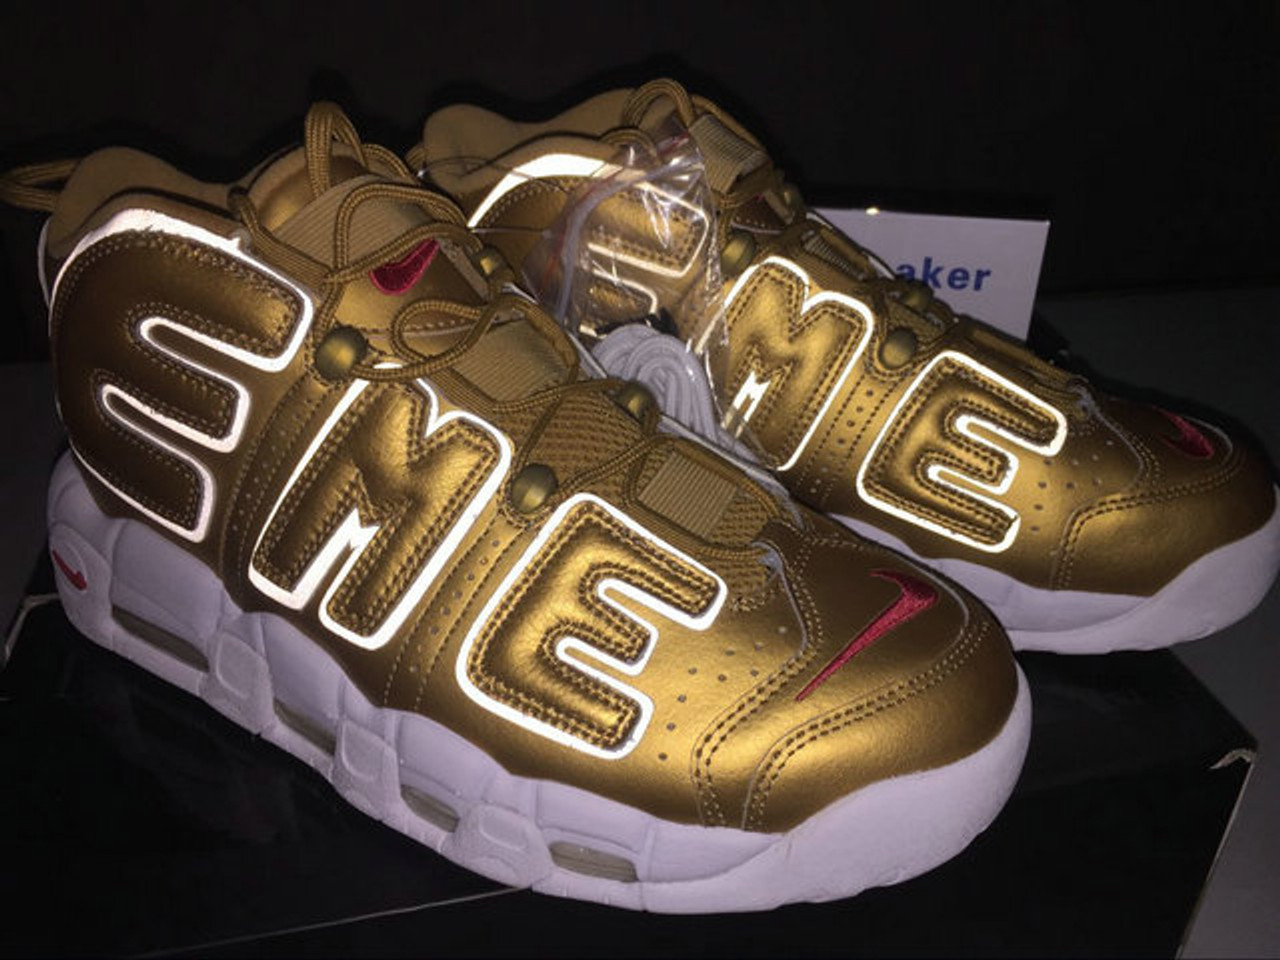 Gold LV x Supreme Nike Cleats 💫 #fyp #foryou #custom #customcleats